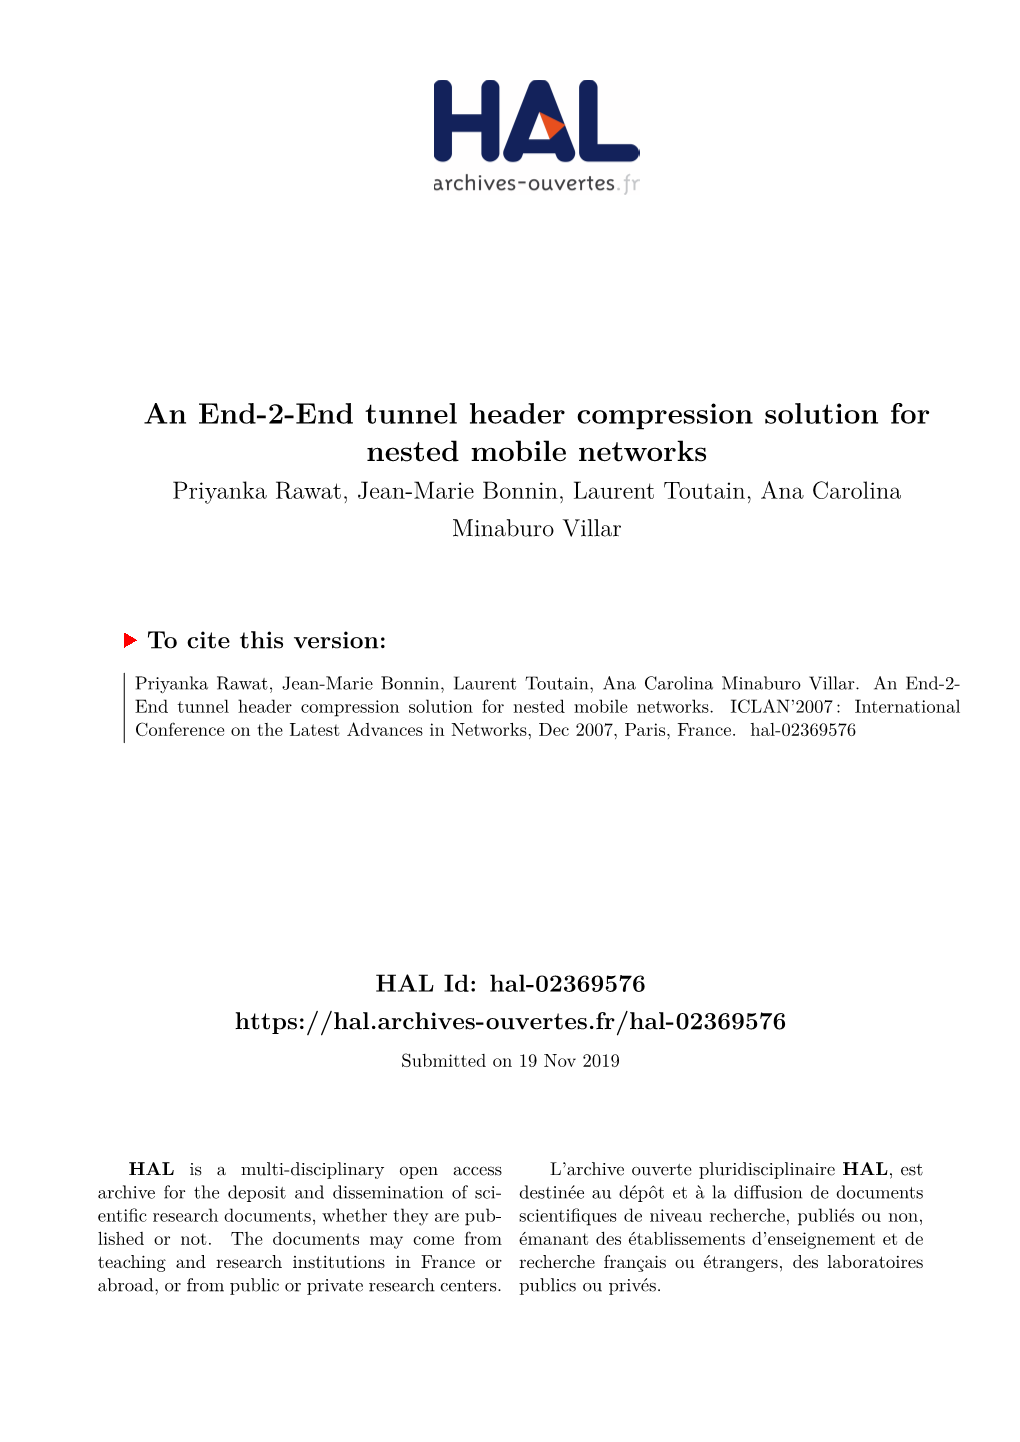 An End-2-End Tunnel Header Compression Solution for Nested Mobile Networks Priyanka Rawat, Jean-Marie Bonnin, Laurent Toutain, Ana Carolina Minaburo Villar